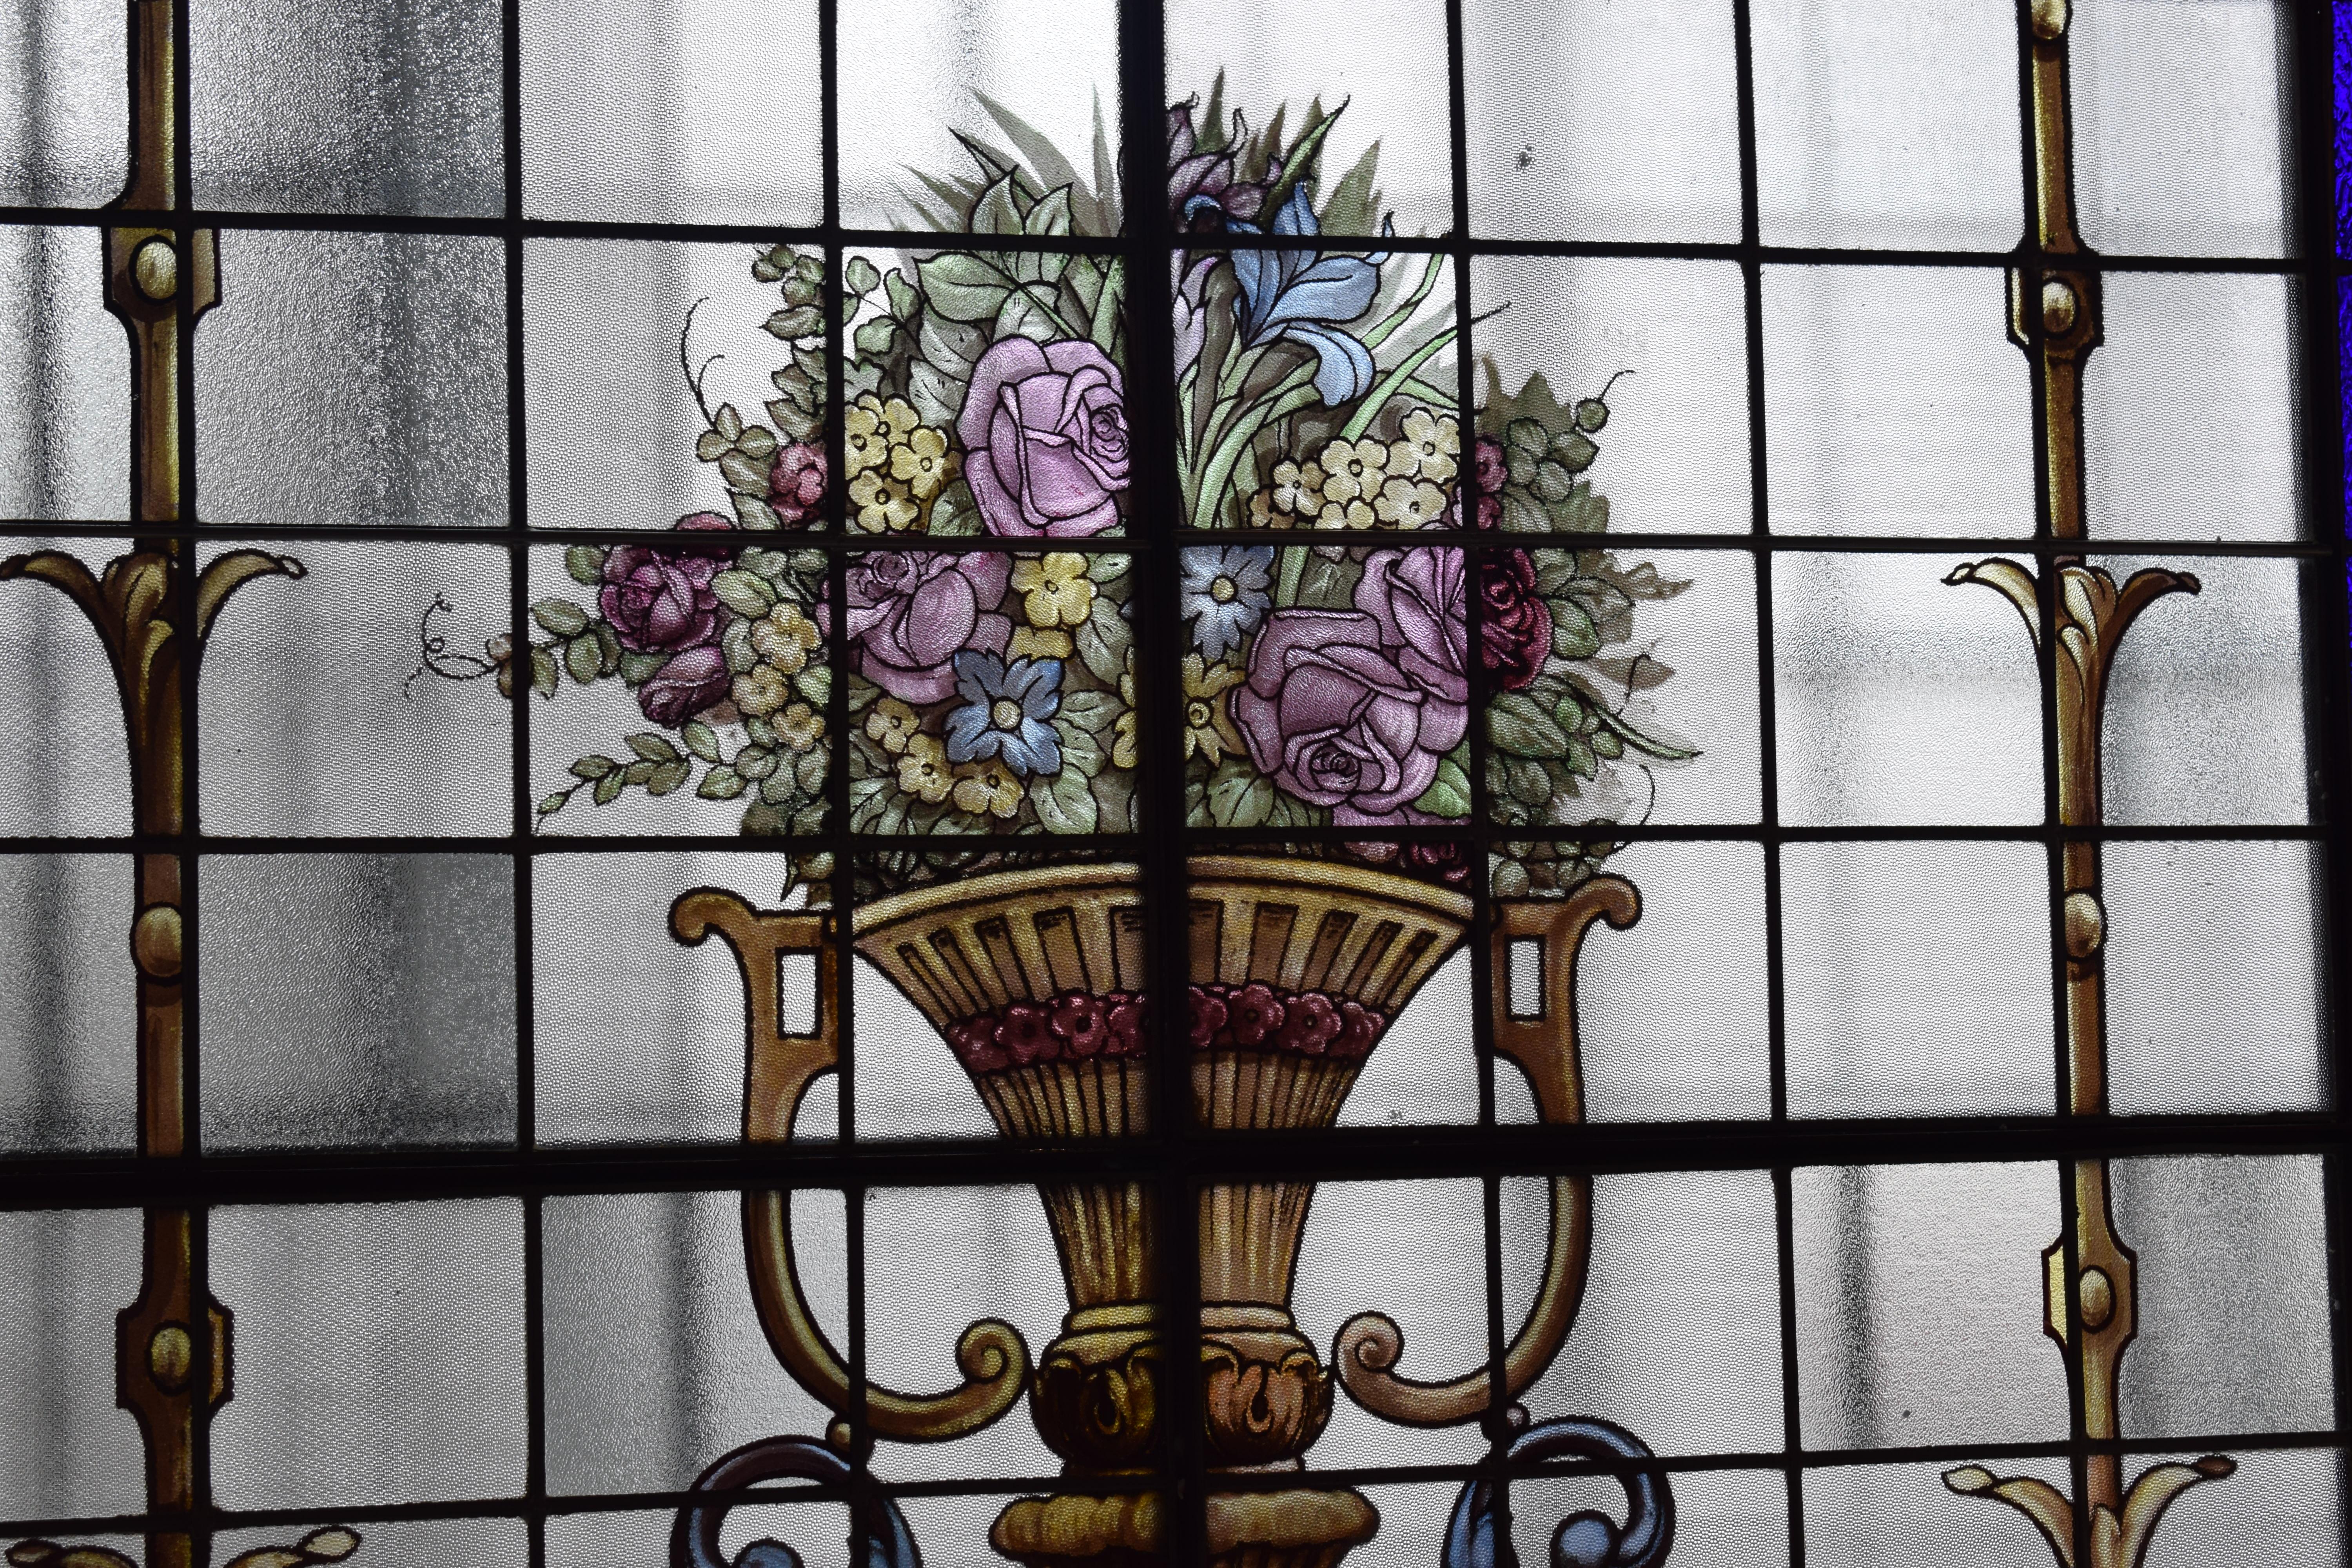 19th century window glass